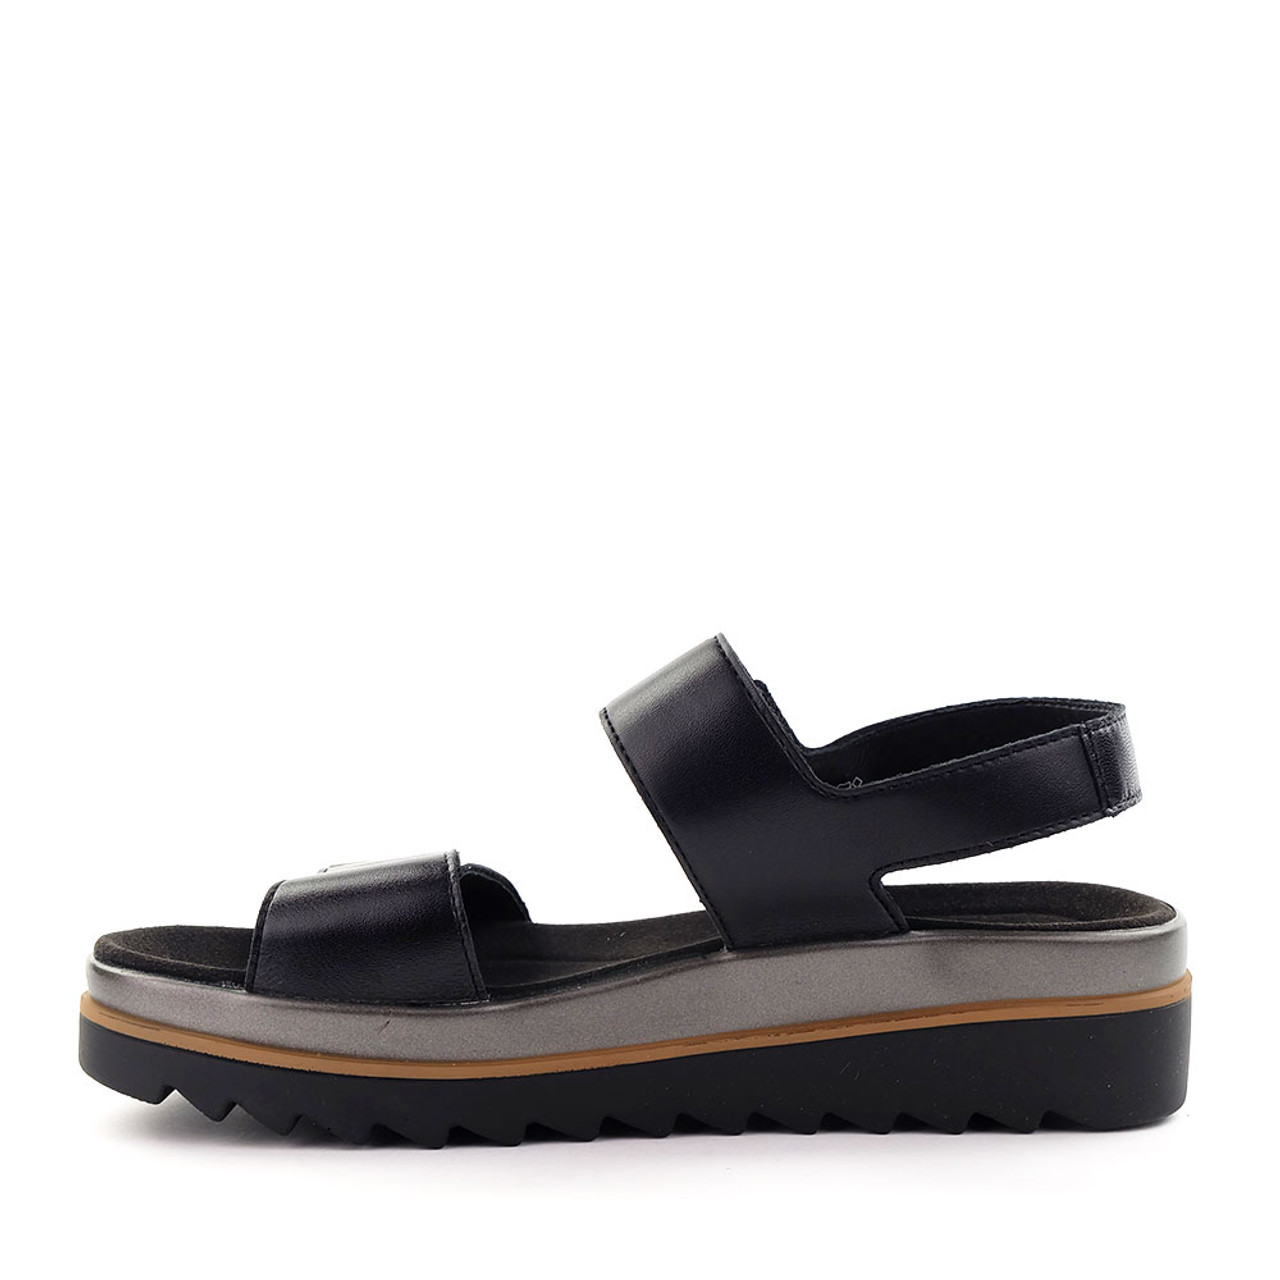 Mephisto Dominica Black Sandal | Hanig's Footwear